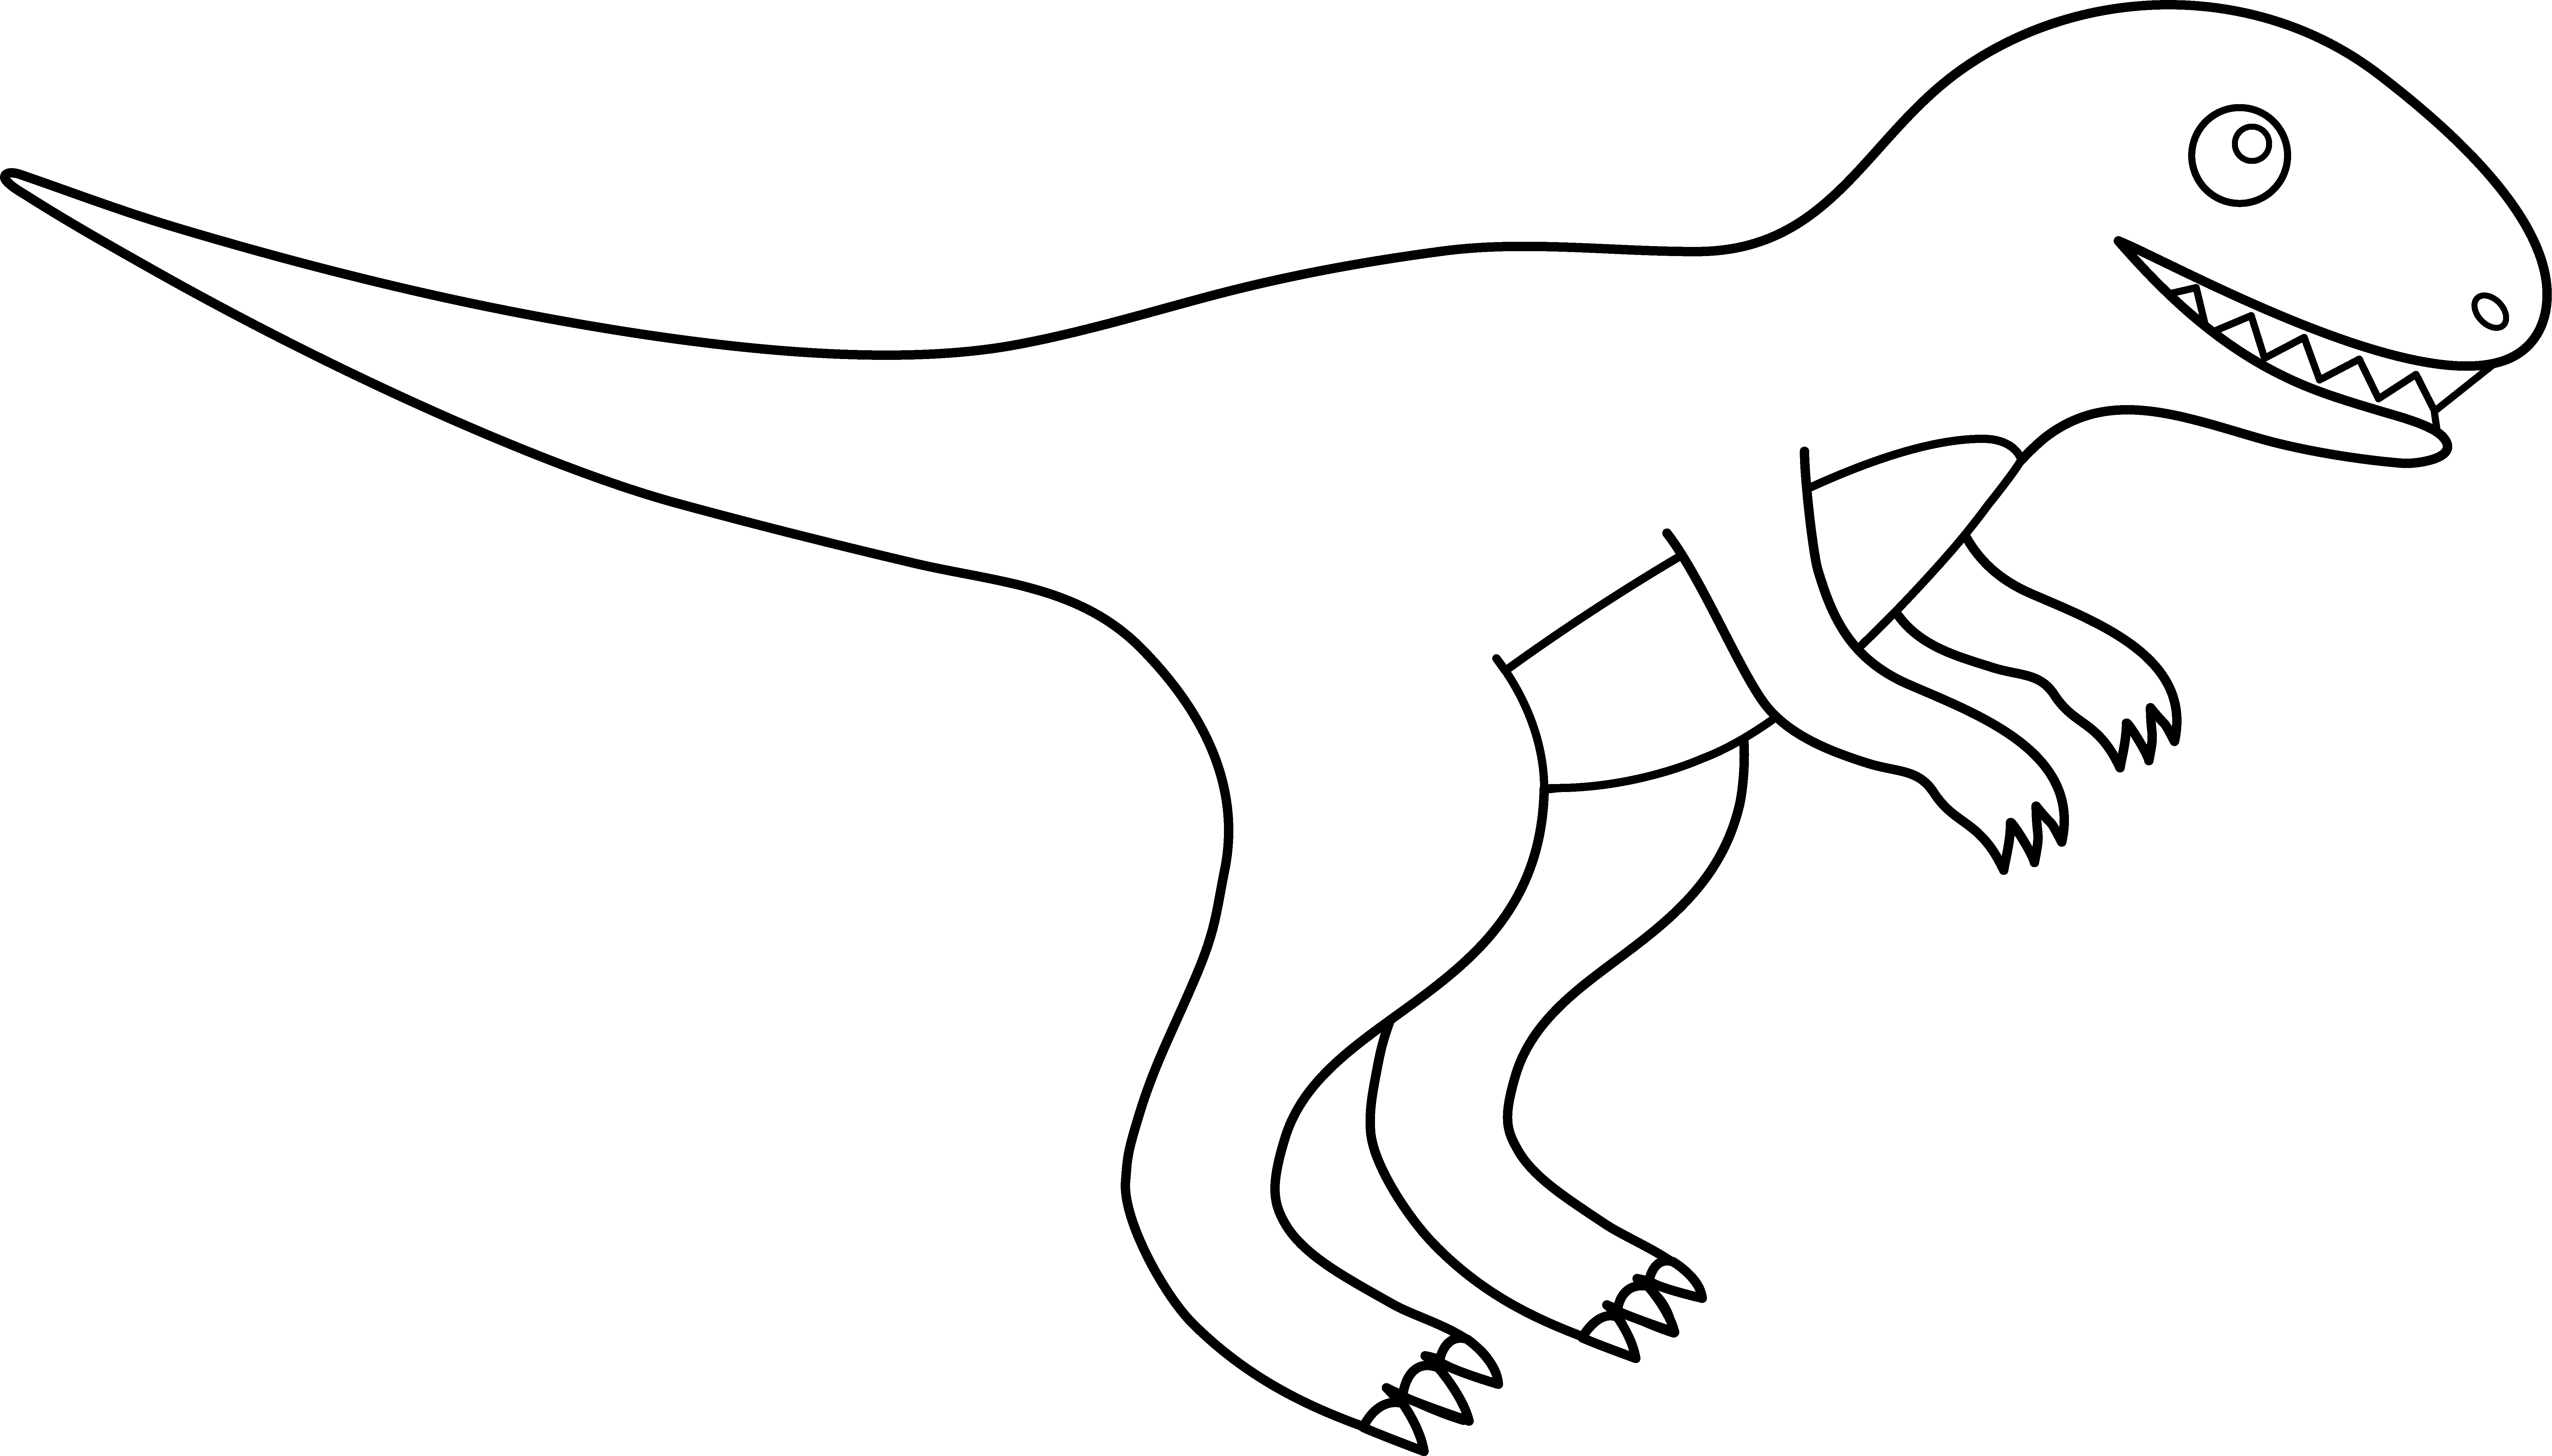 trex clipart carnivore dinosaur